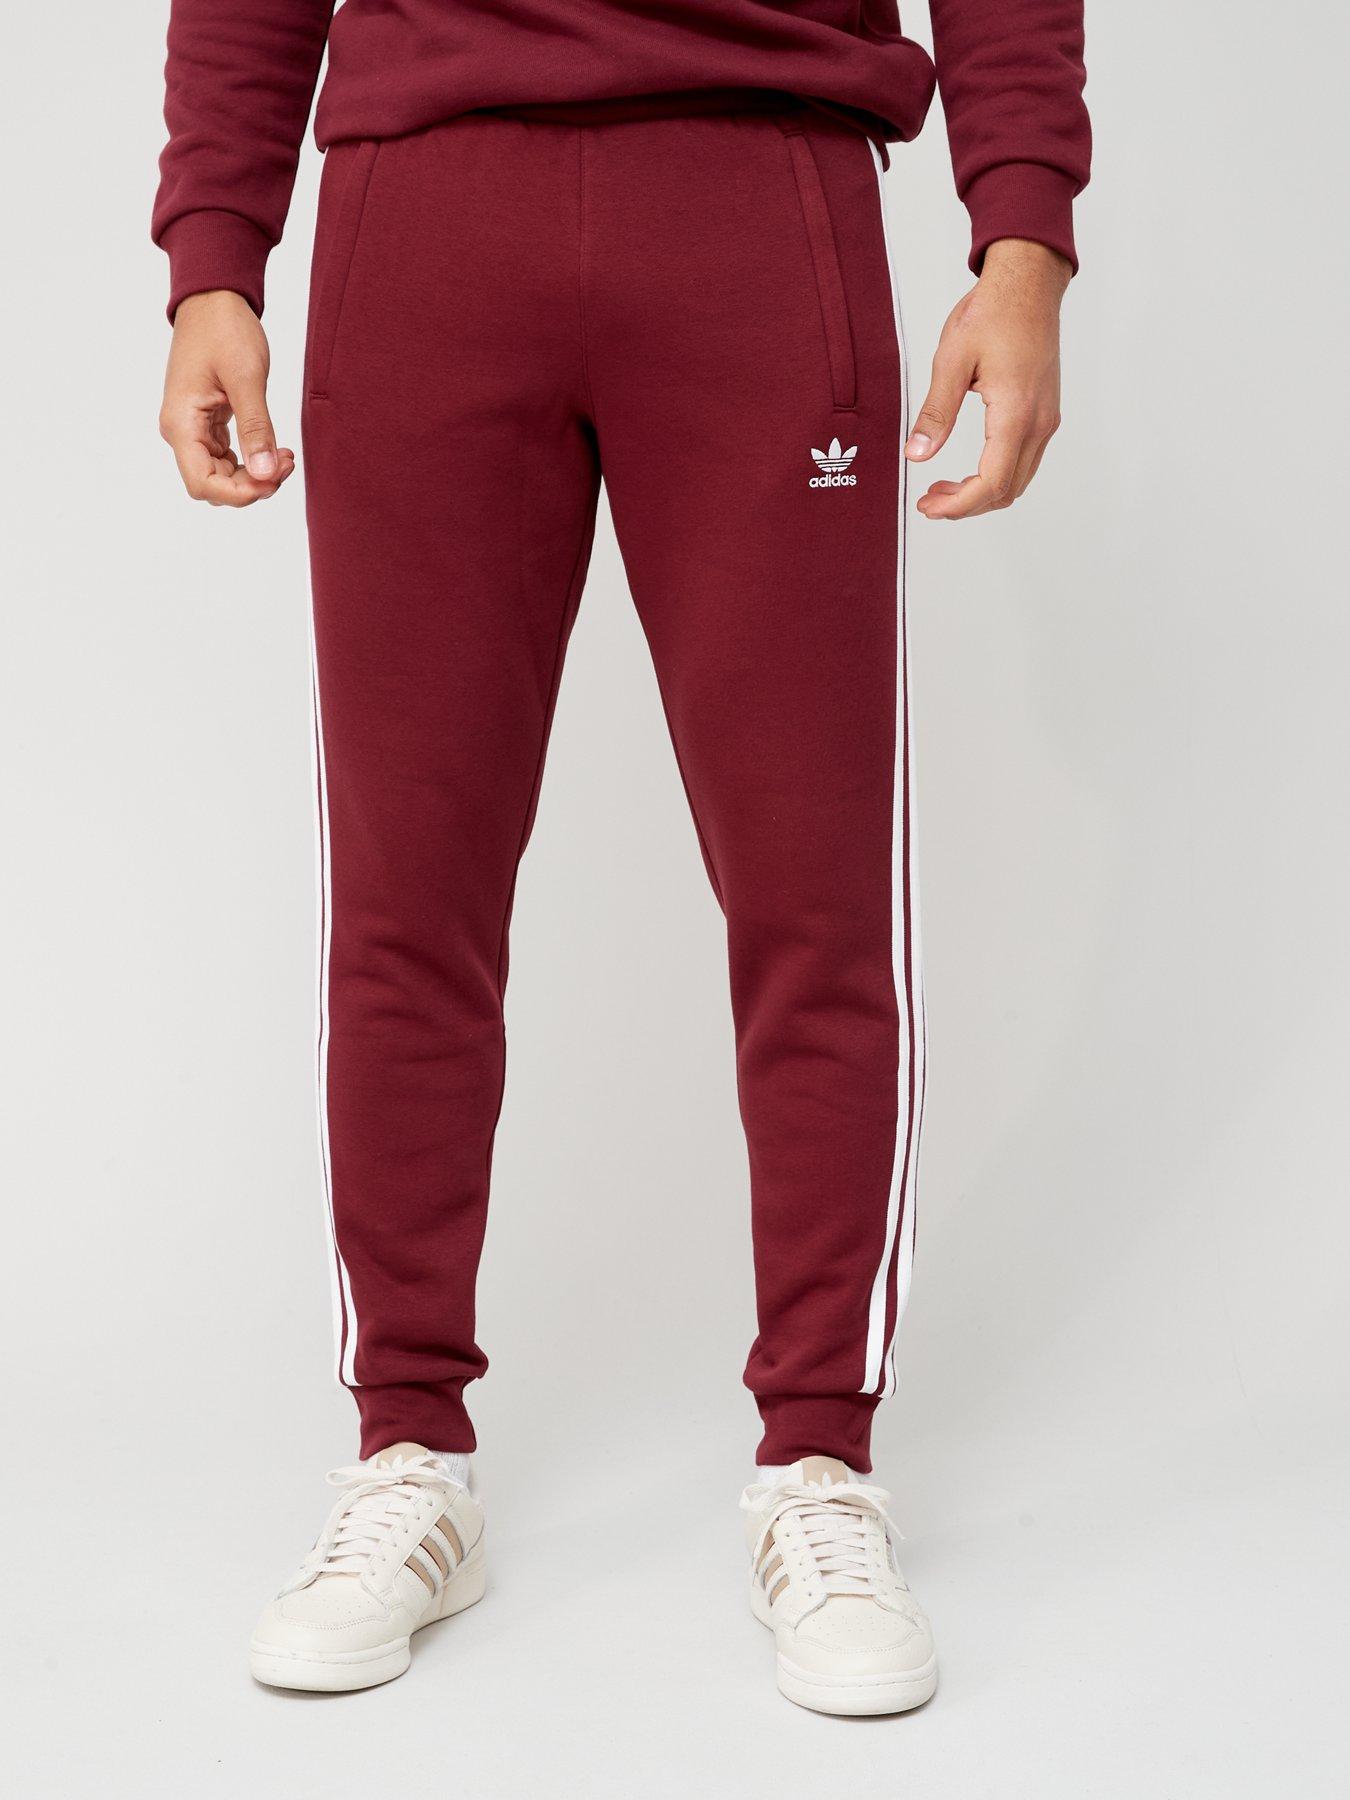 su Salón Intensivo adidas Originals Men's Originals 3-Stripes Pant - RED | Very Ireland